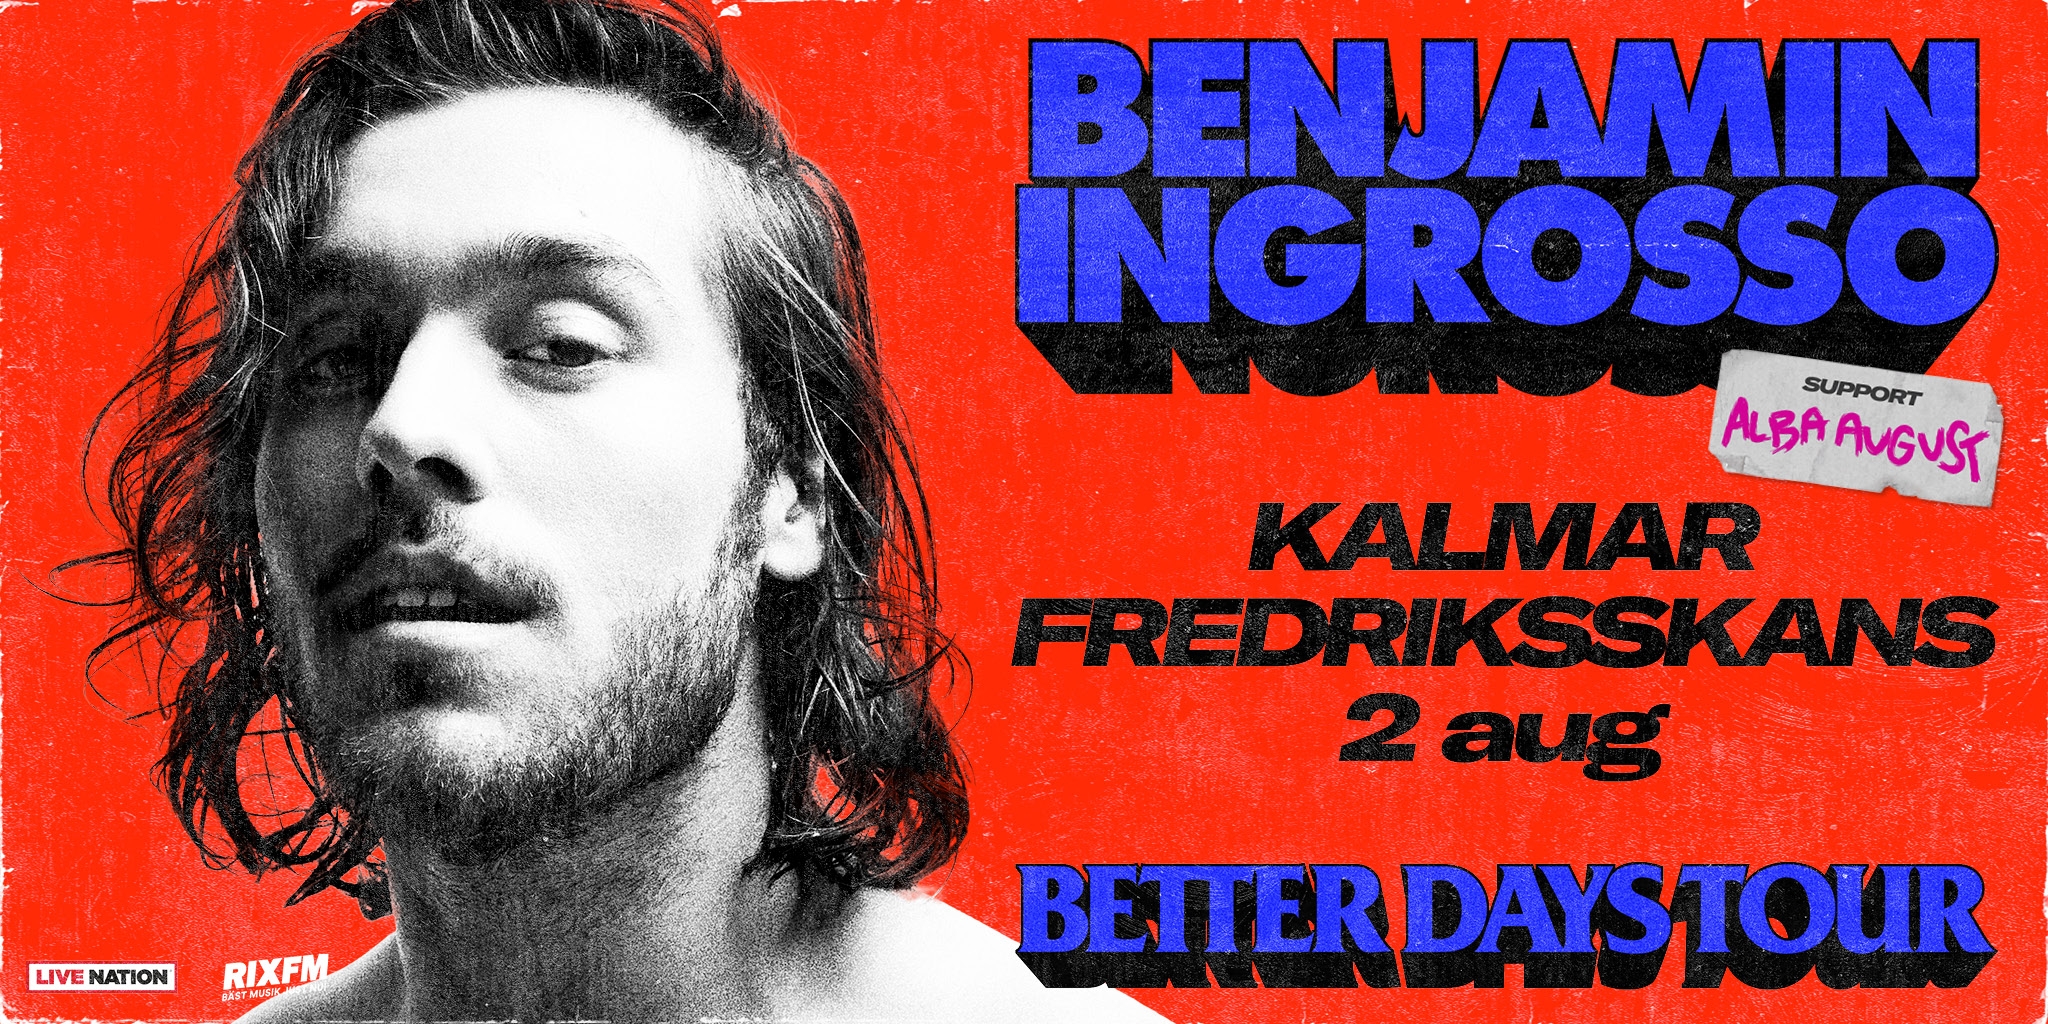 Benjamin Ingrosso - Better Days Tour